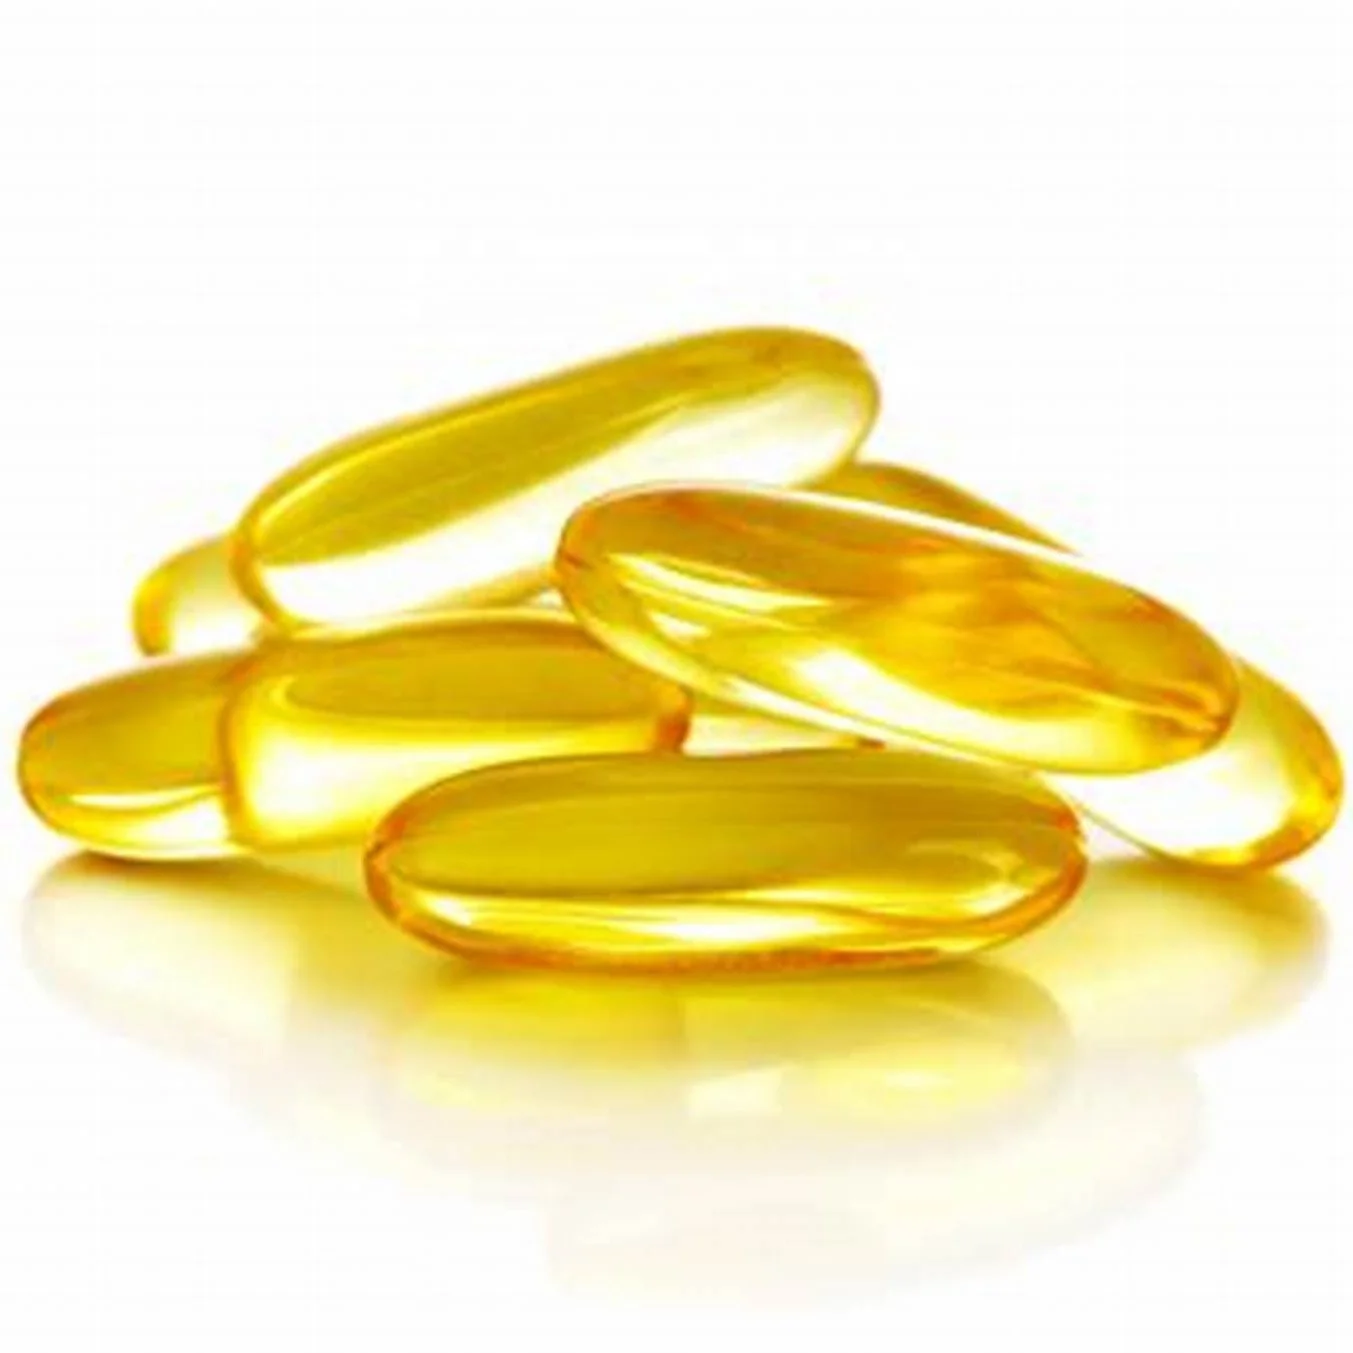 
Nutrition supplement fish oil softgel with lemon oil flavor 